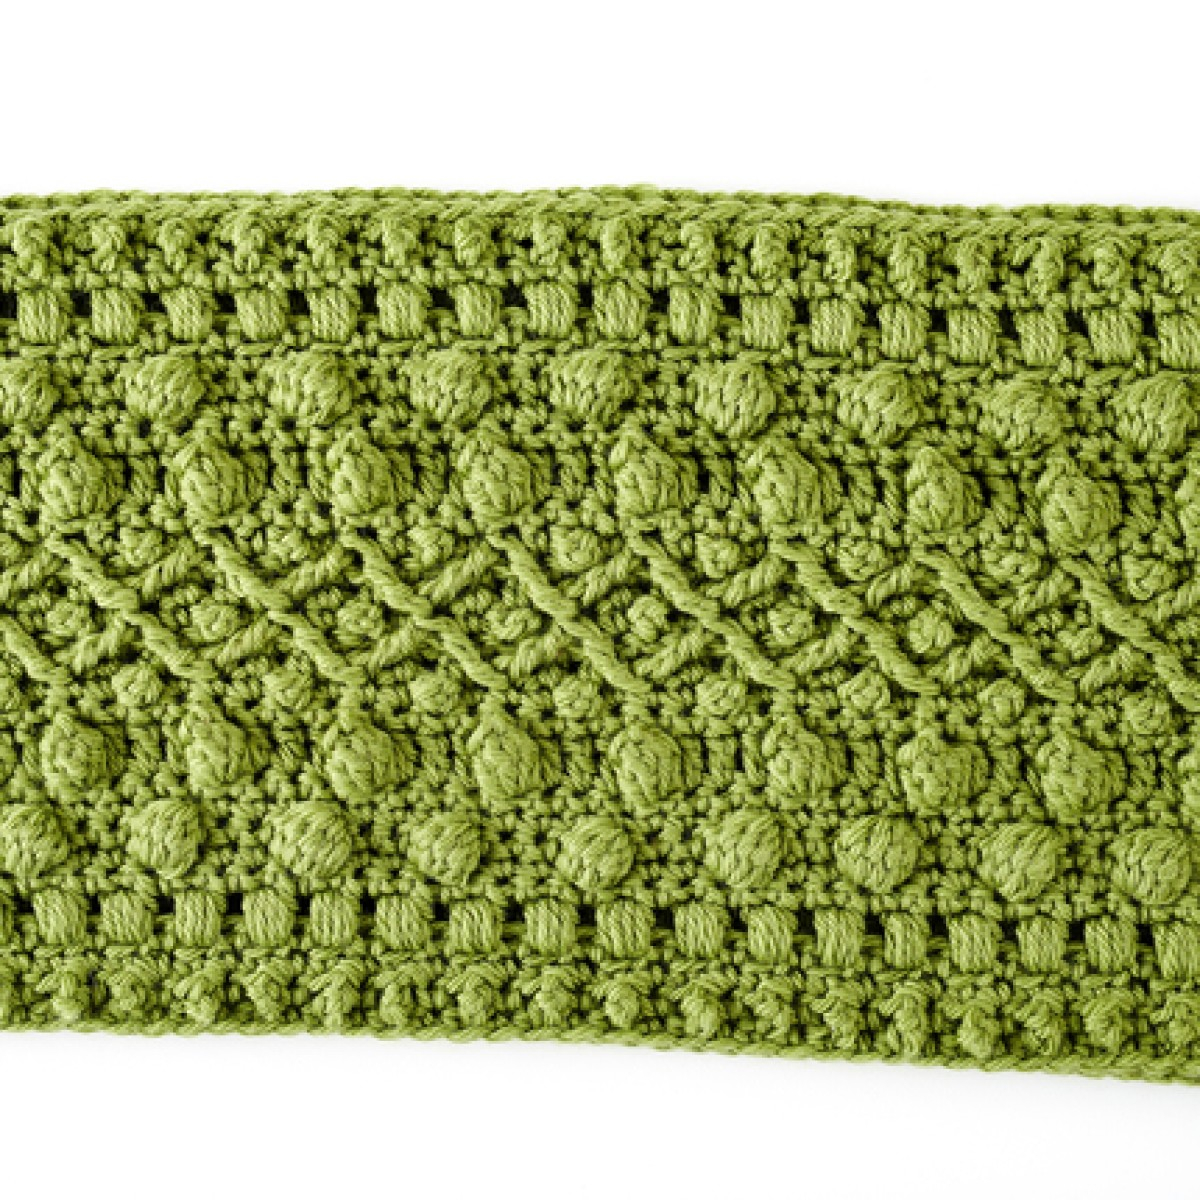 Unusual Crochet Patterns 7 Next Level Crochet Stitches Youll Love